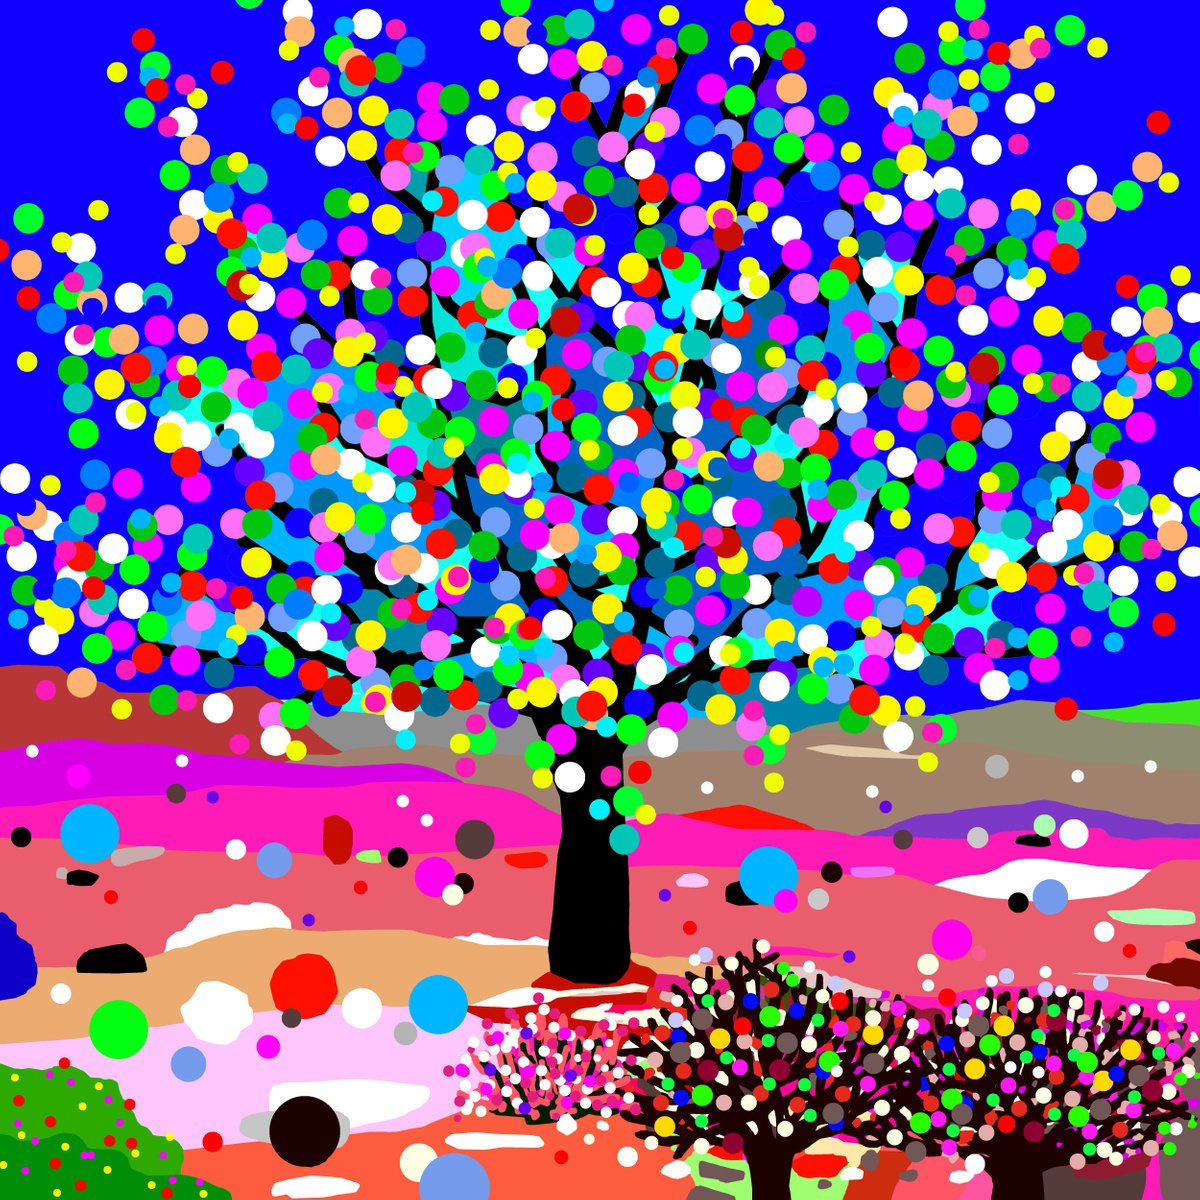 The lightning seeds (Las semillas de luz) (pop art, landscape) by Alejos - Pop Art landscapes